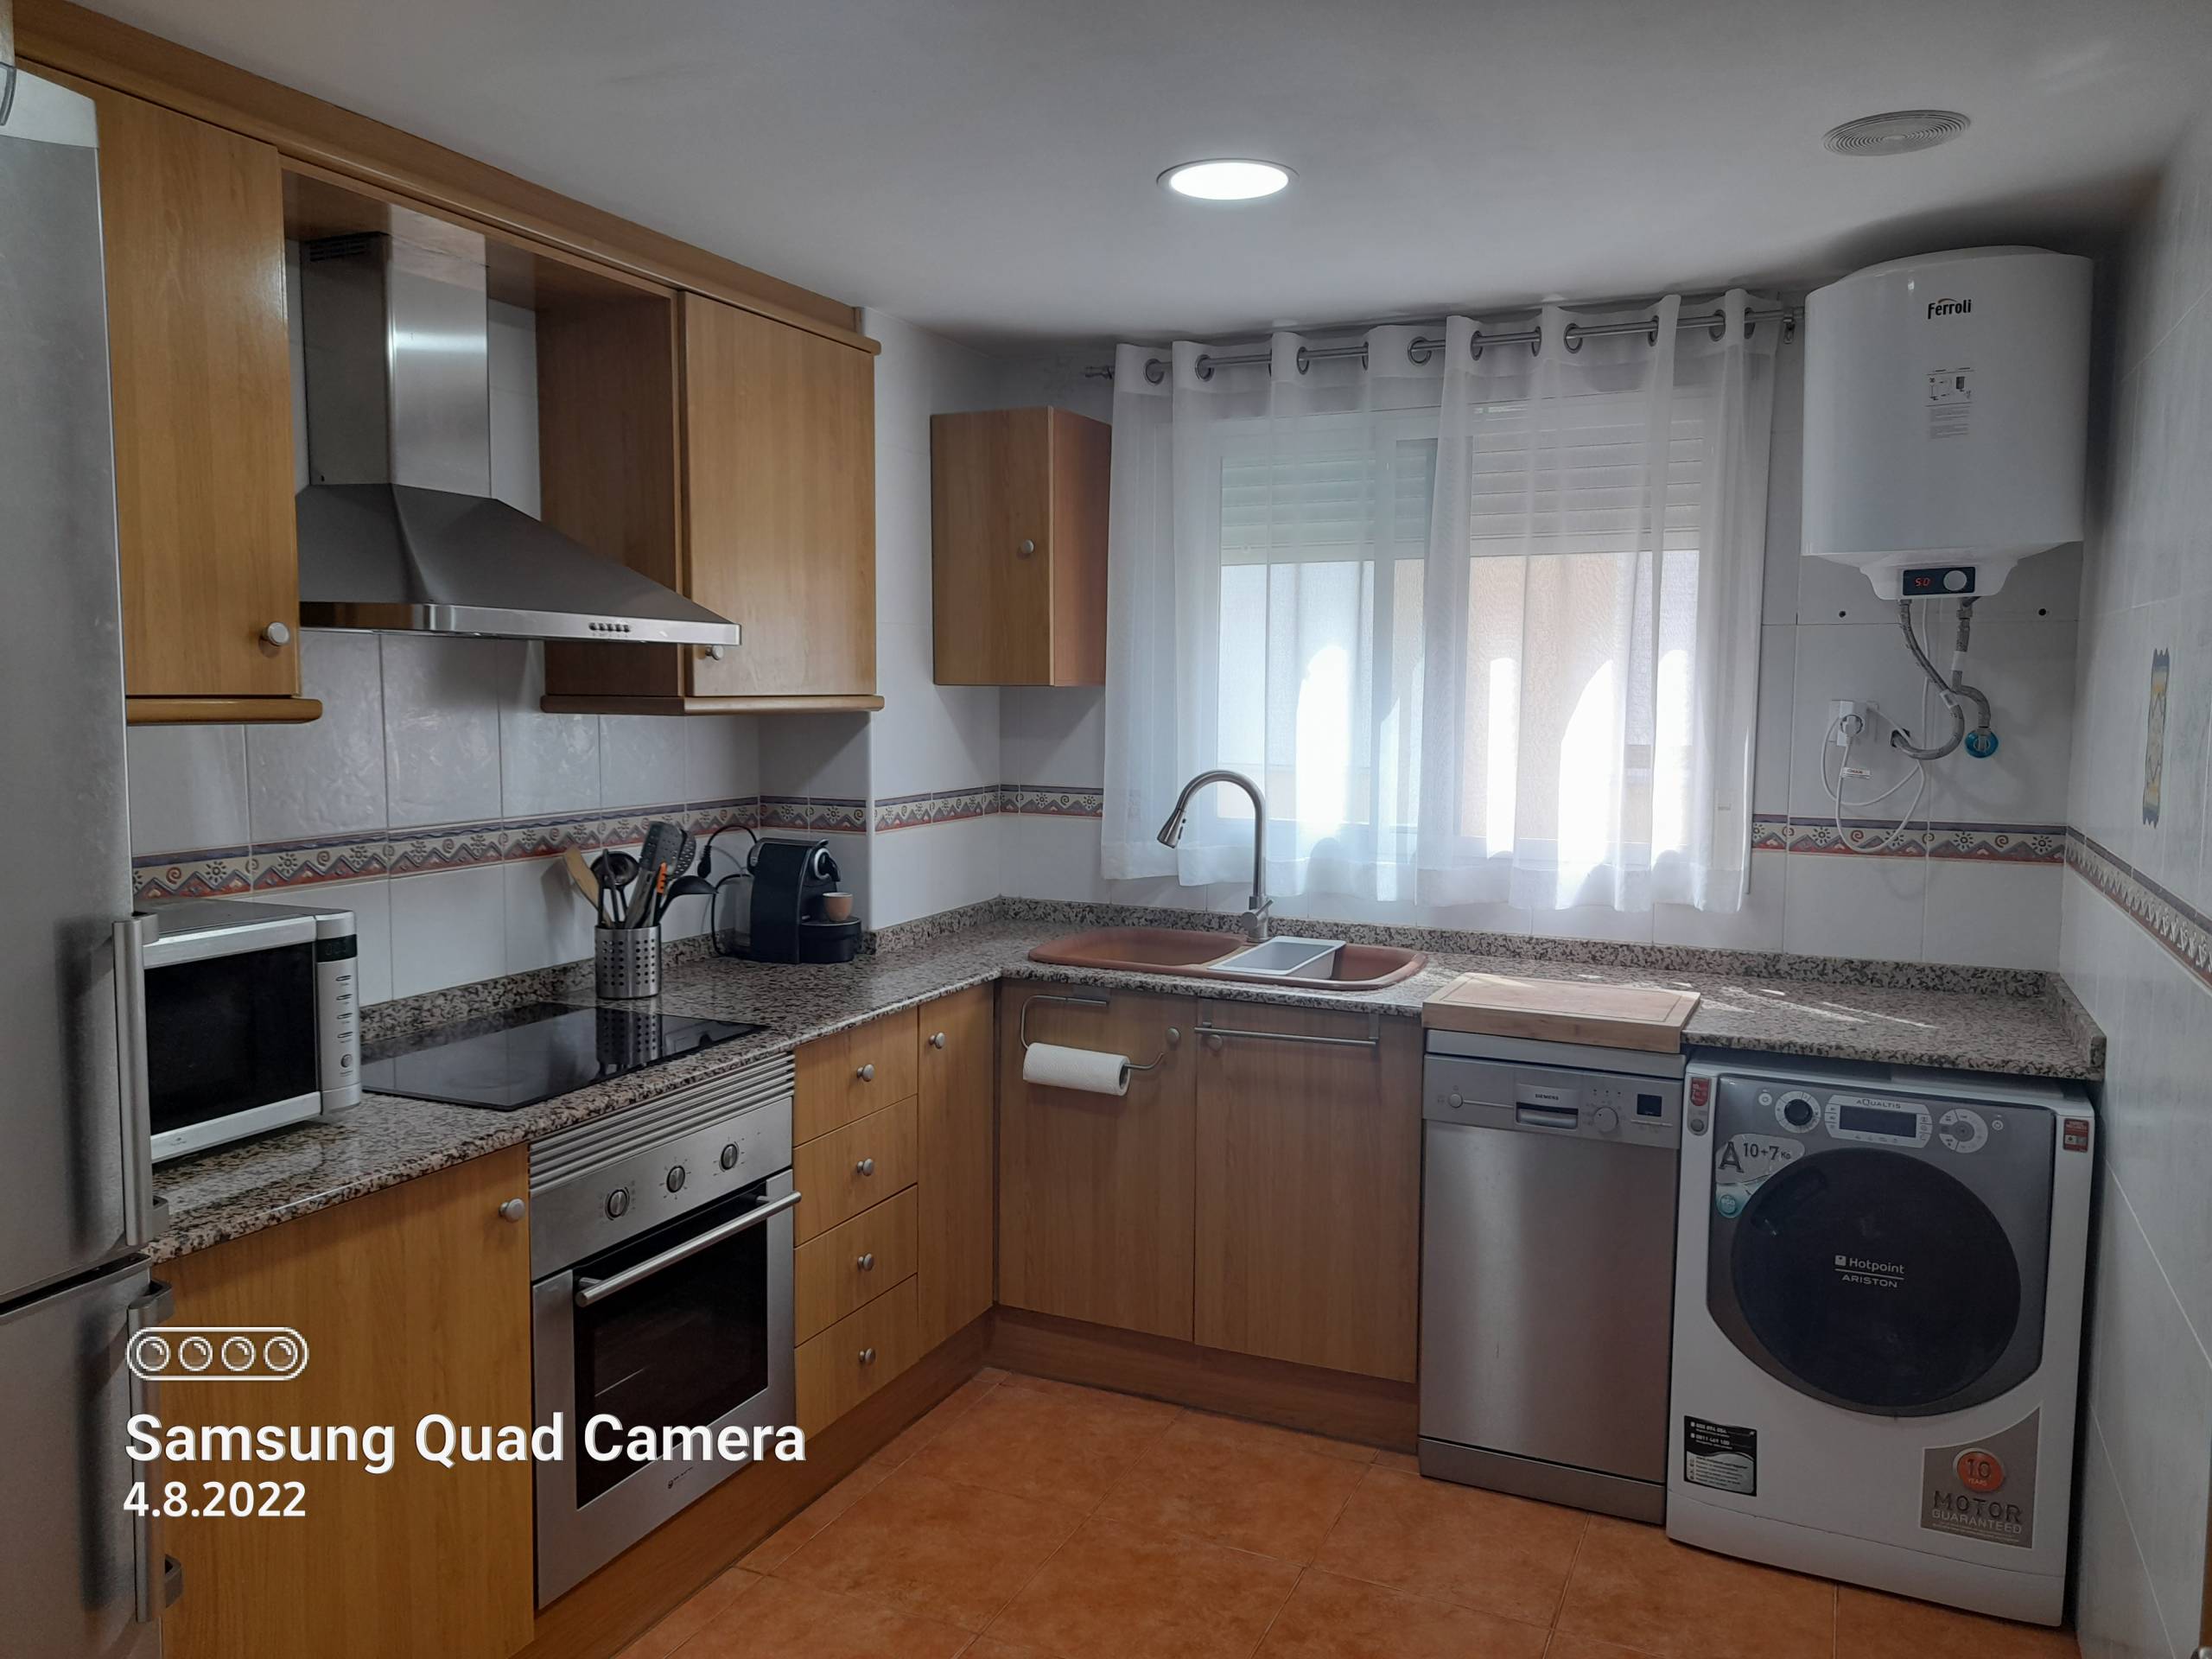 Pinzon - Furnished apartment for rent in Moncofar